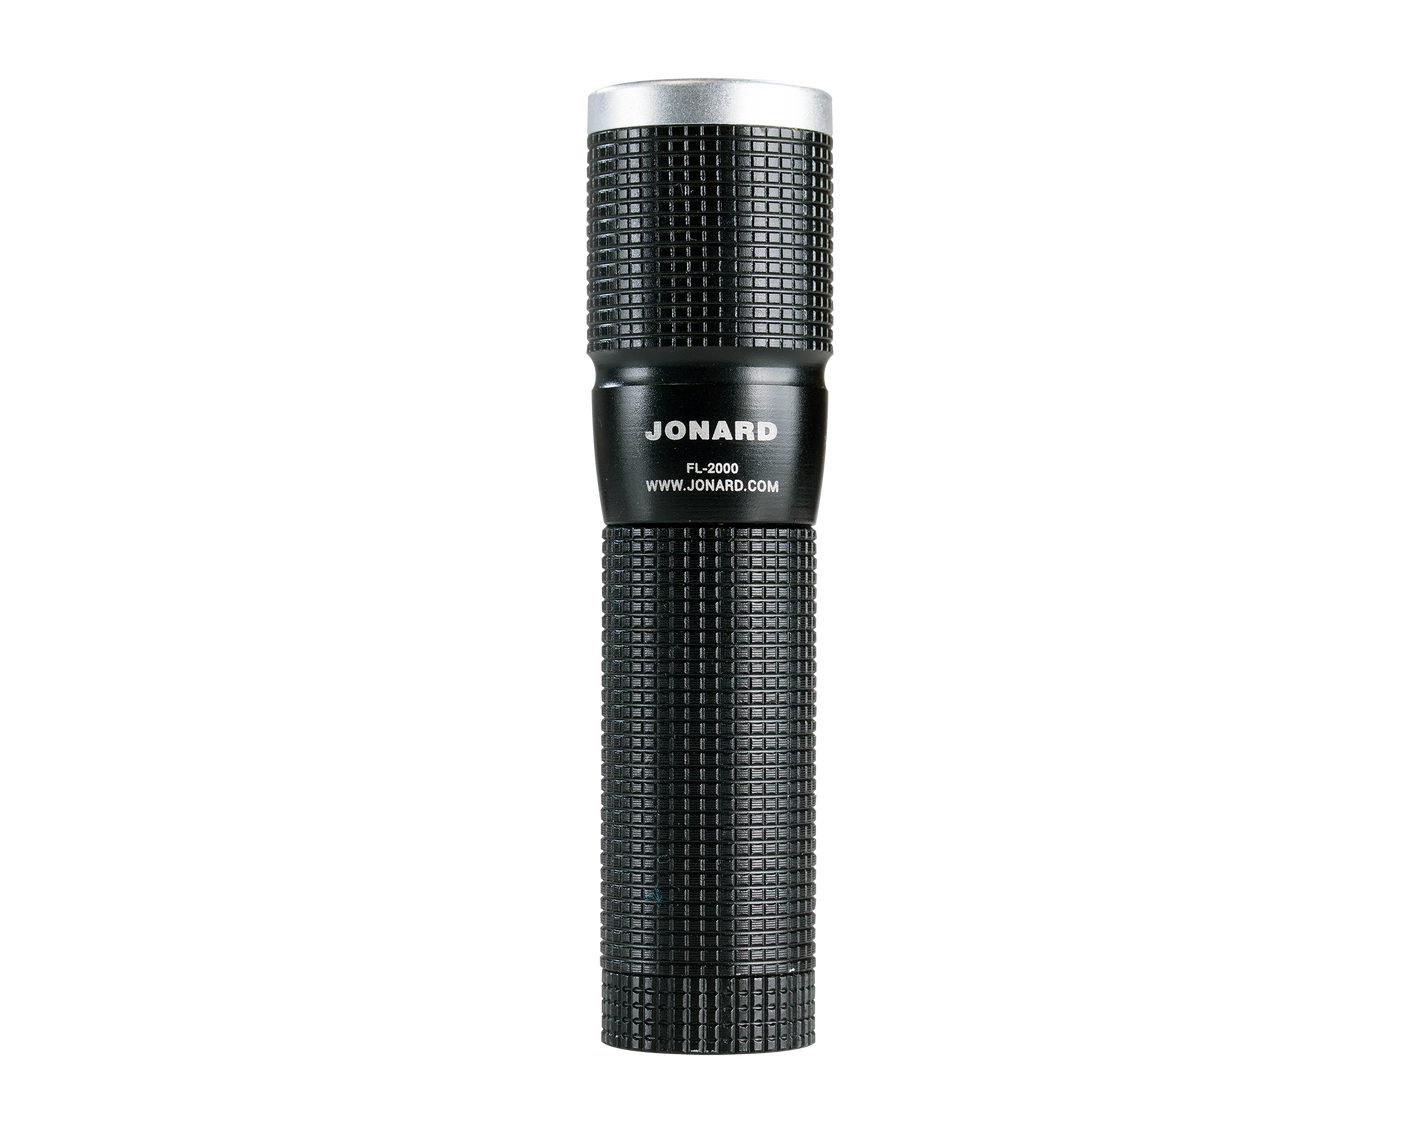 FL-2000: LED Flashlight with Zoom Lens, Jonard